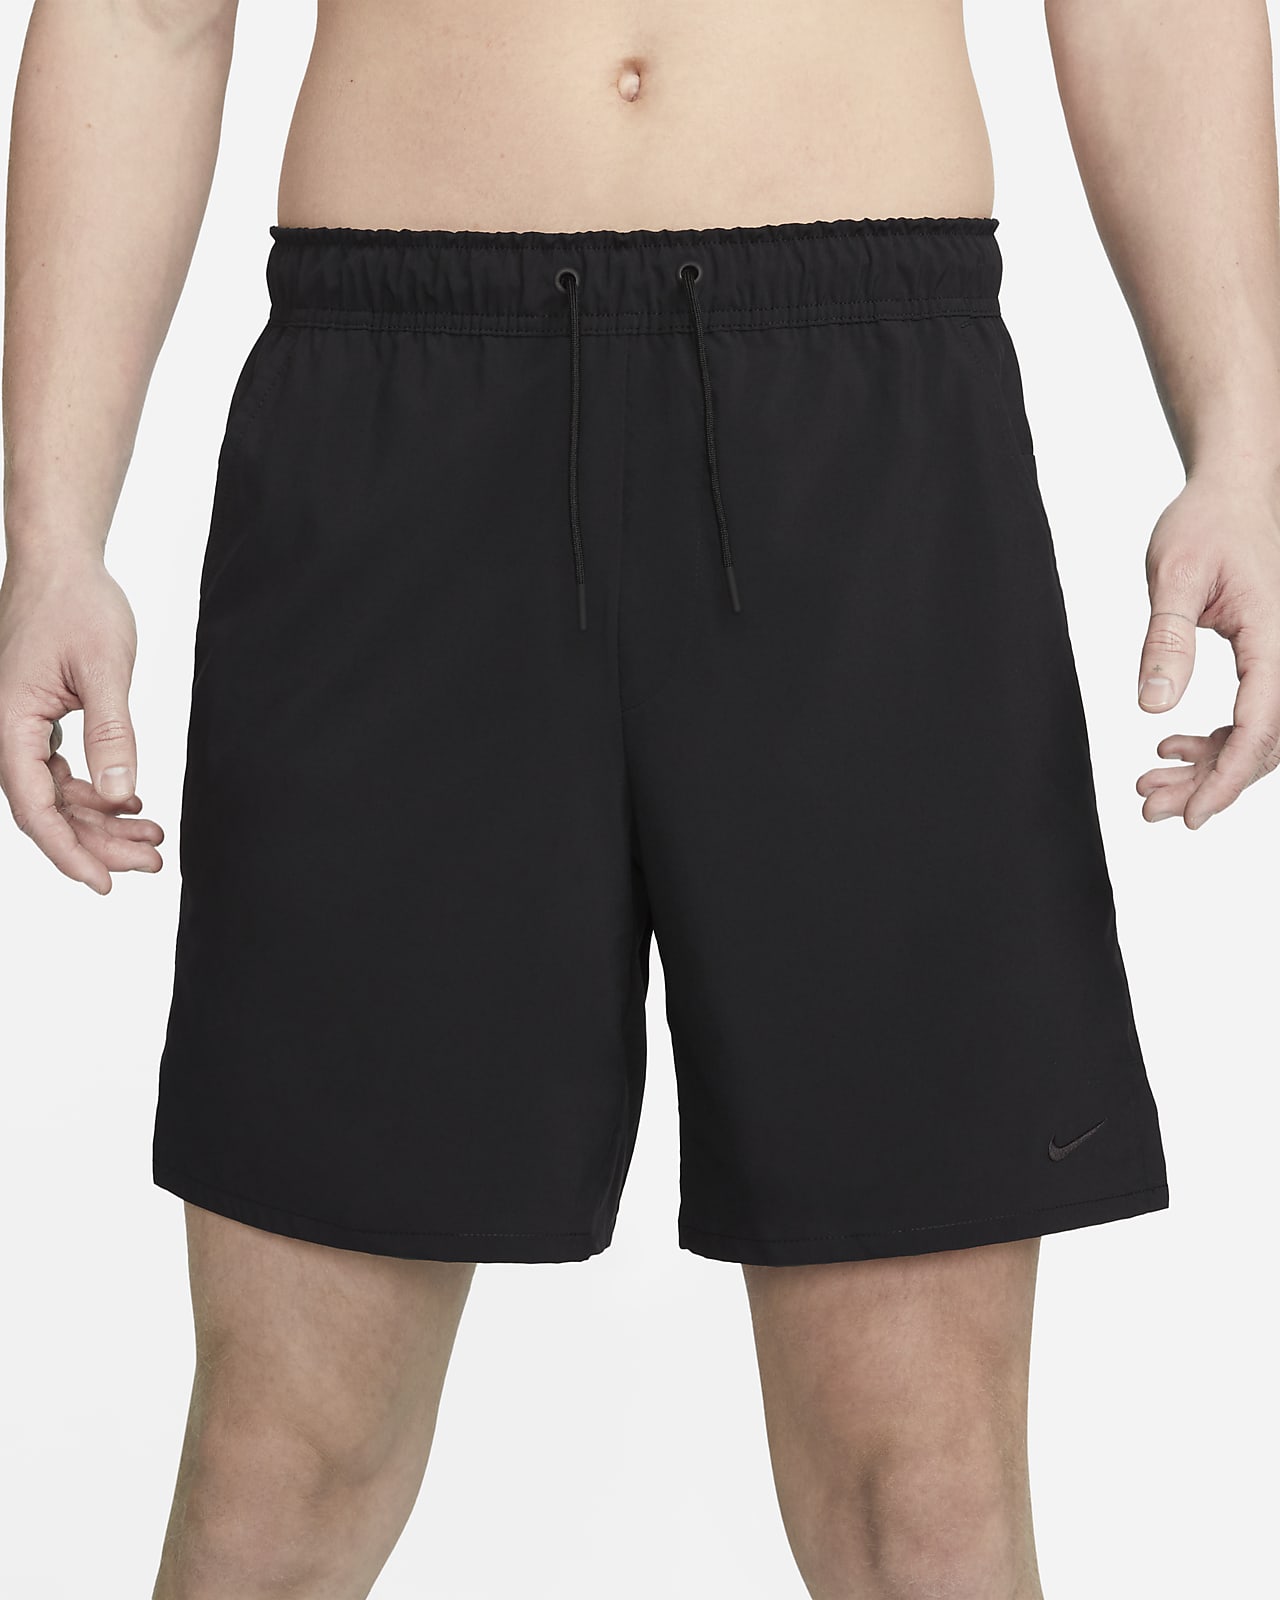 LULU DOOP! Nike dri fit running shorts in a size